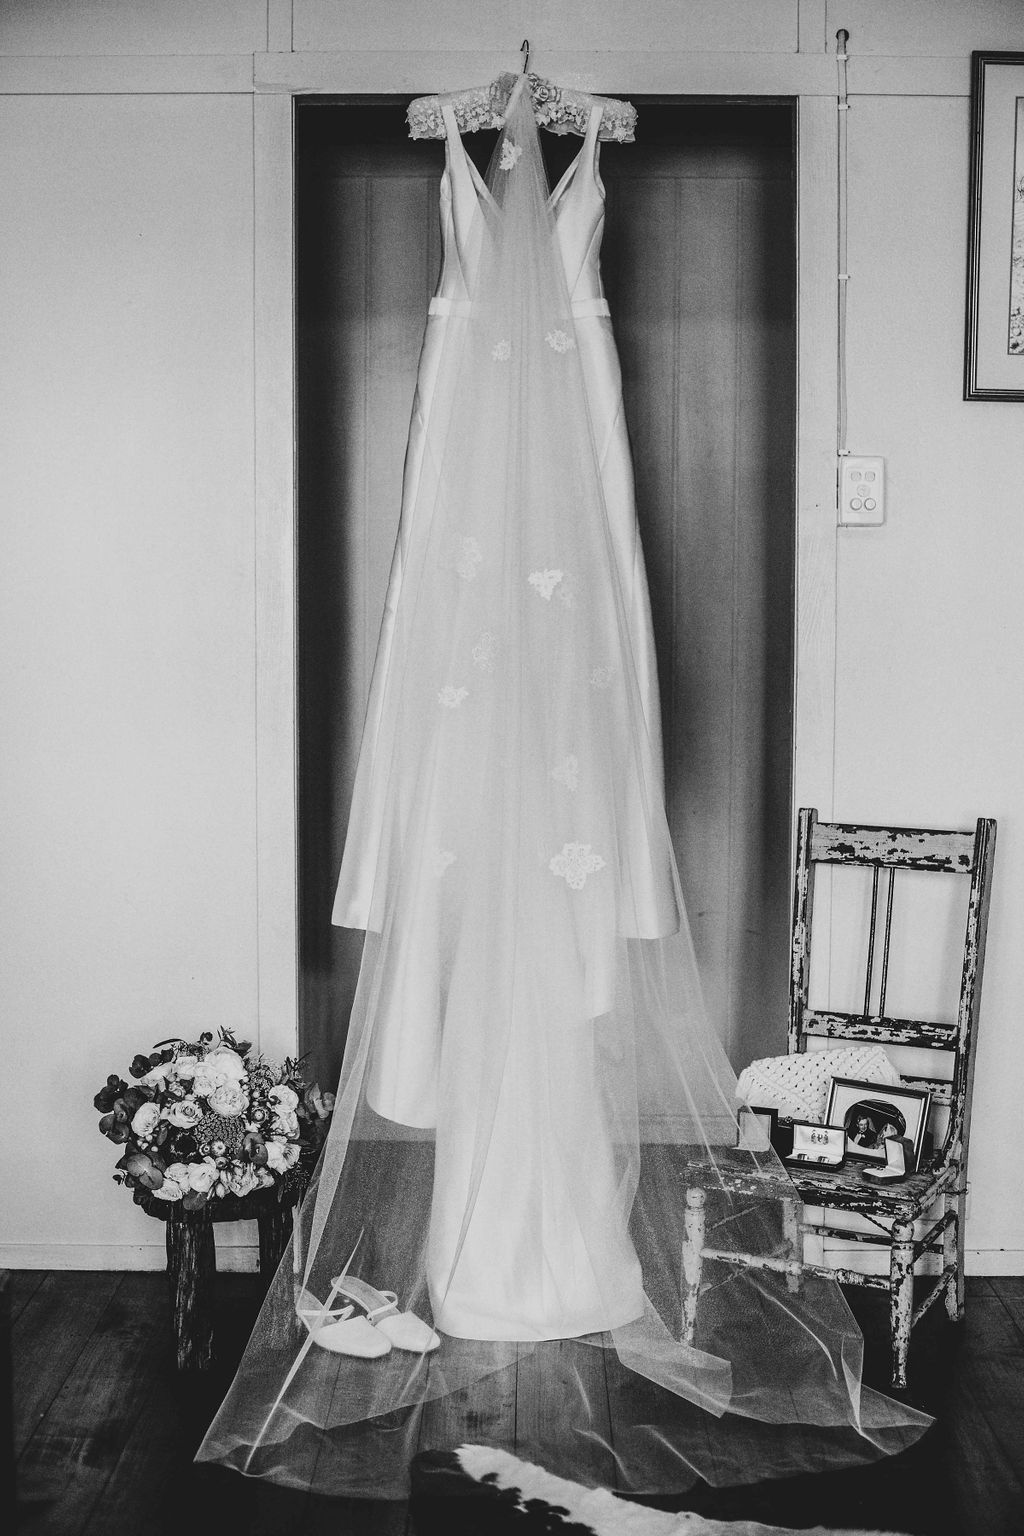 Real bride Chaseley wore the Bespoke Leonie/Alexia wedding dress by Karen Willis Holmes.